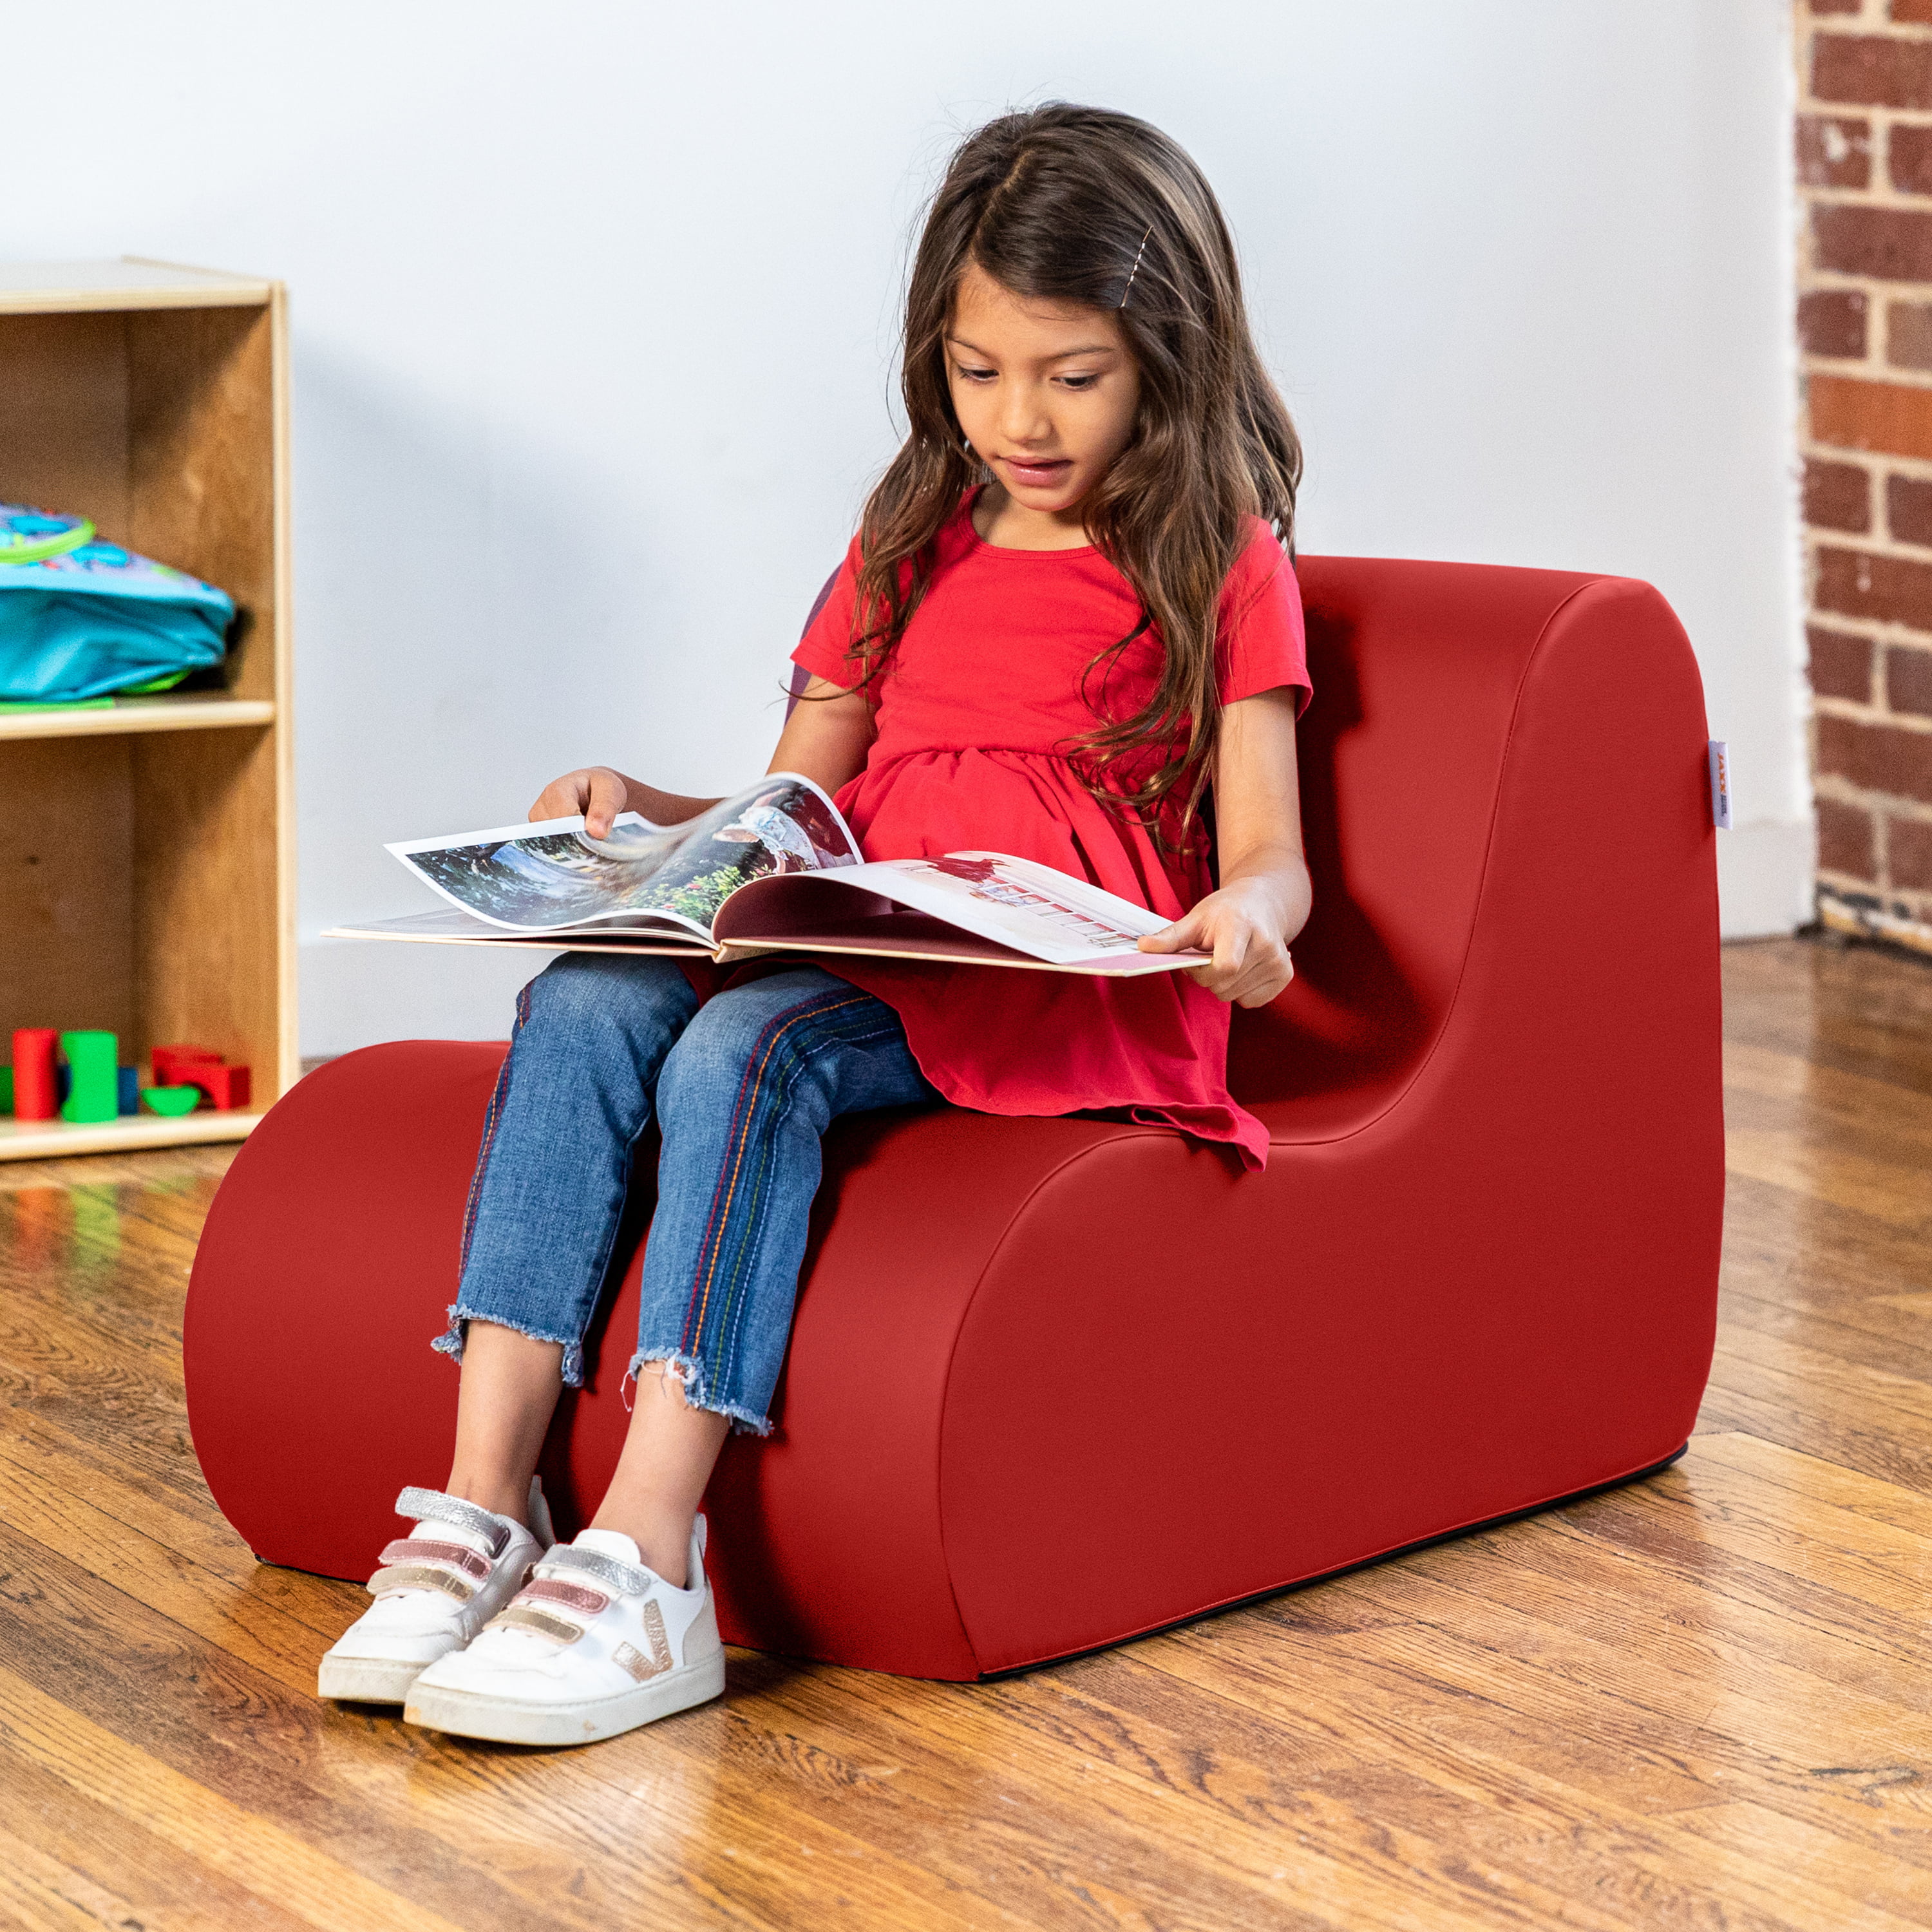 Jaxx Midtown Jr Classroom Soft Foam Chair - Premium Vinyl Cover, Red